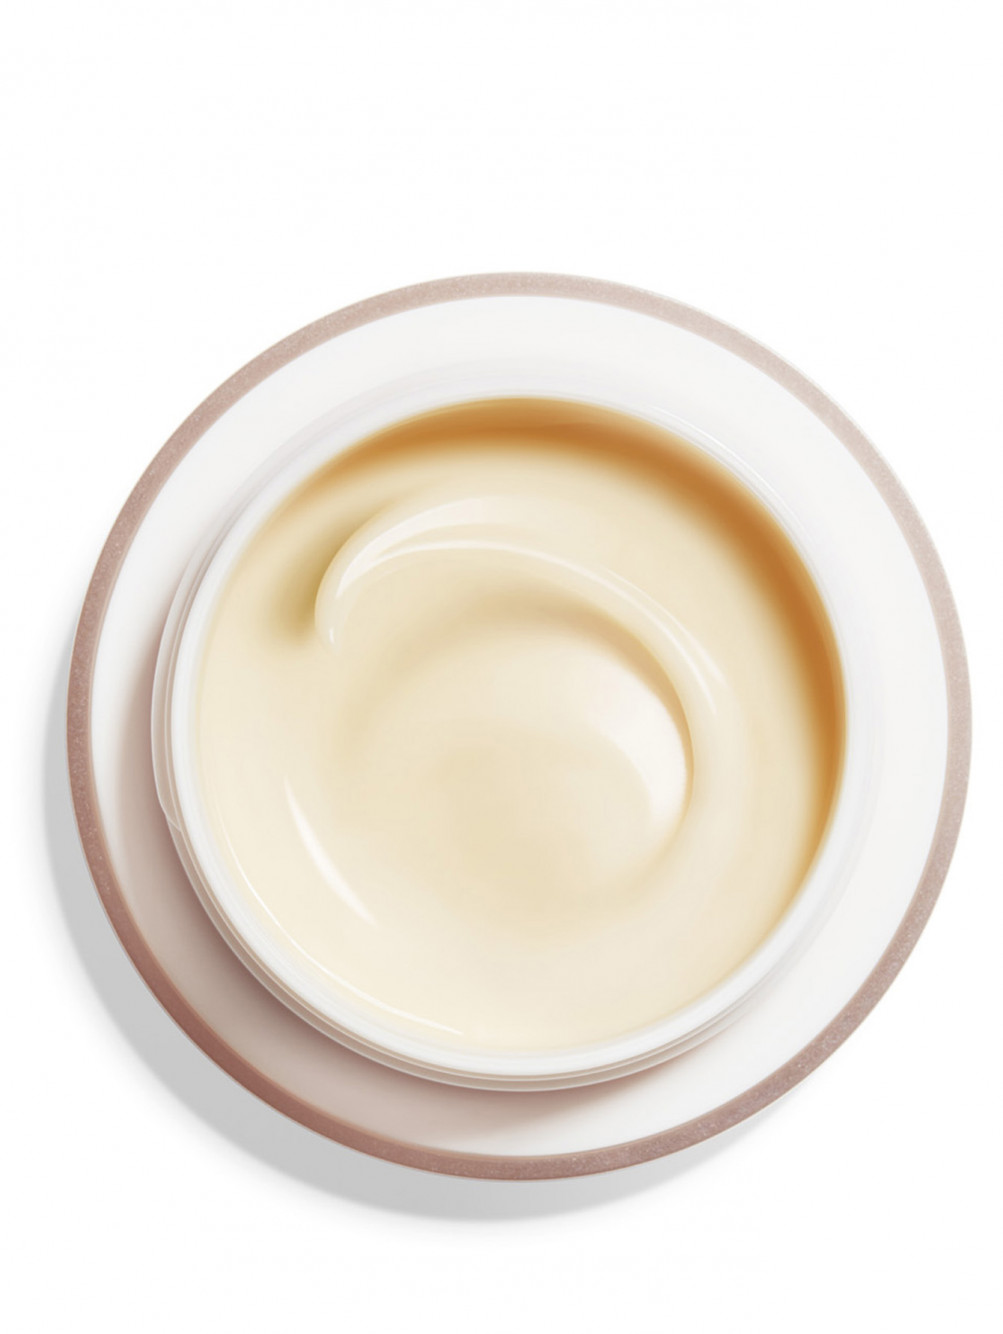 Крем, разглаживающий морщины Benefiance Wrinkle Smoothing Cream, 75 мл - Обтравка2